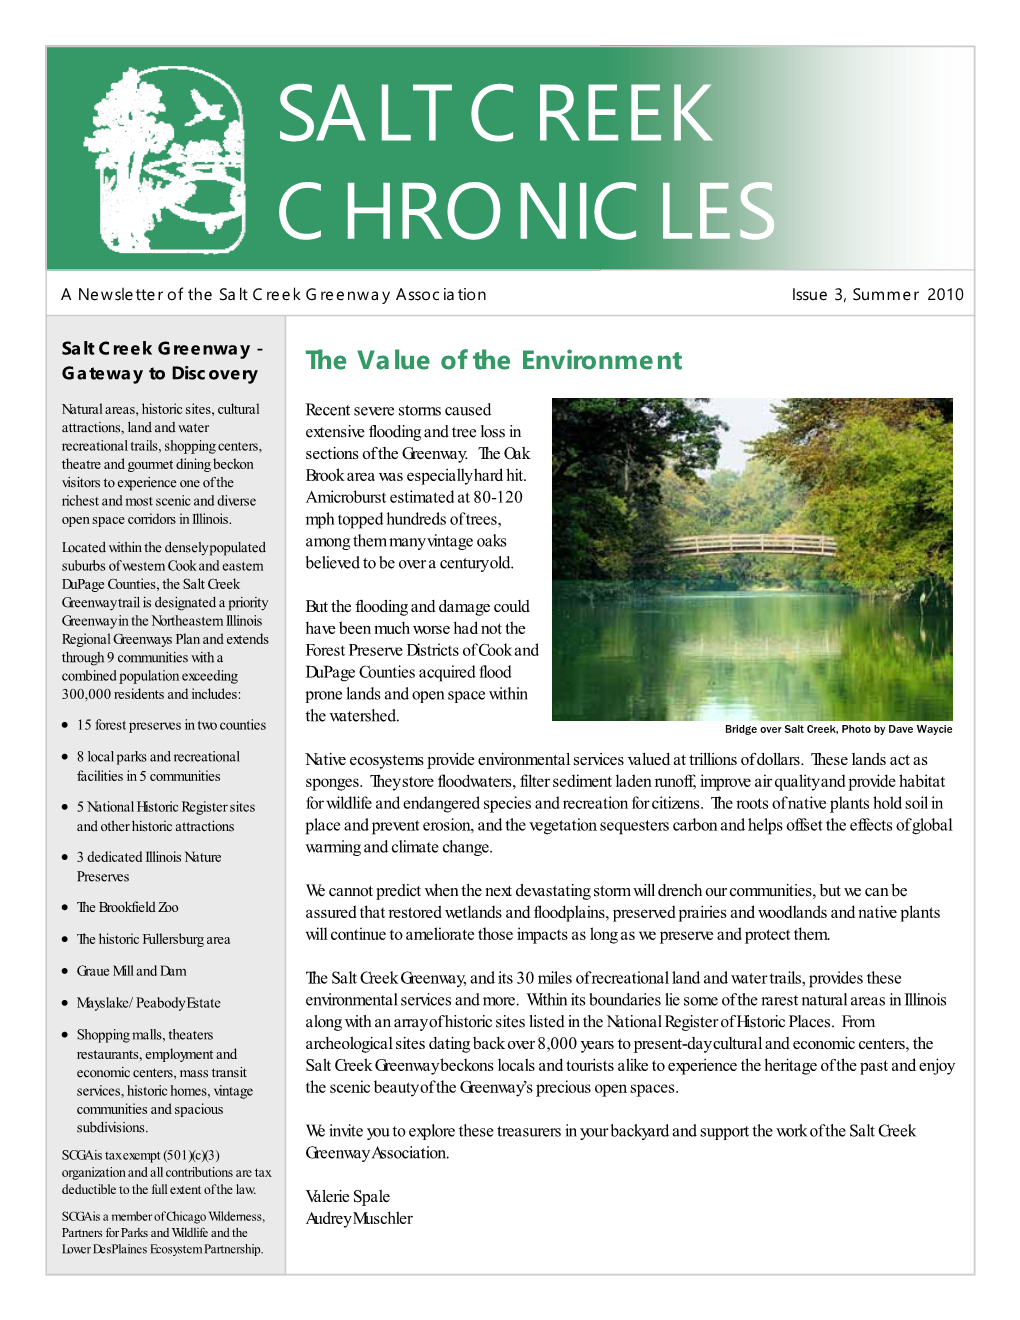 Salt Creek Chronicles Printing and Design by Edmark Press, Inc